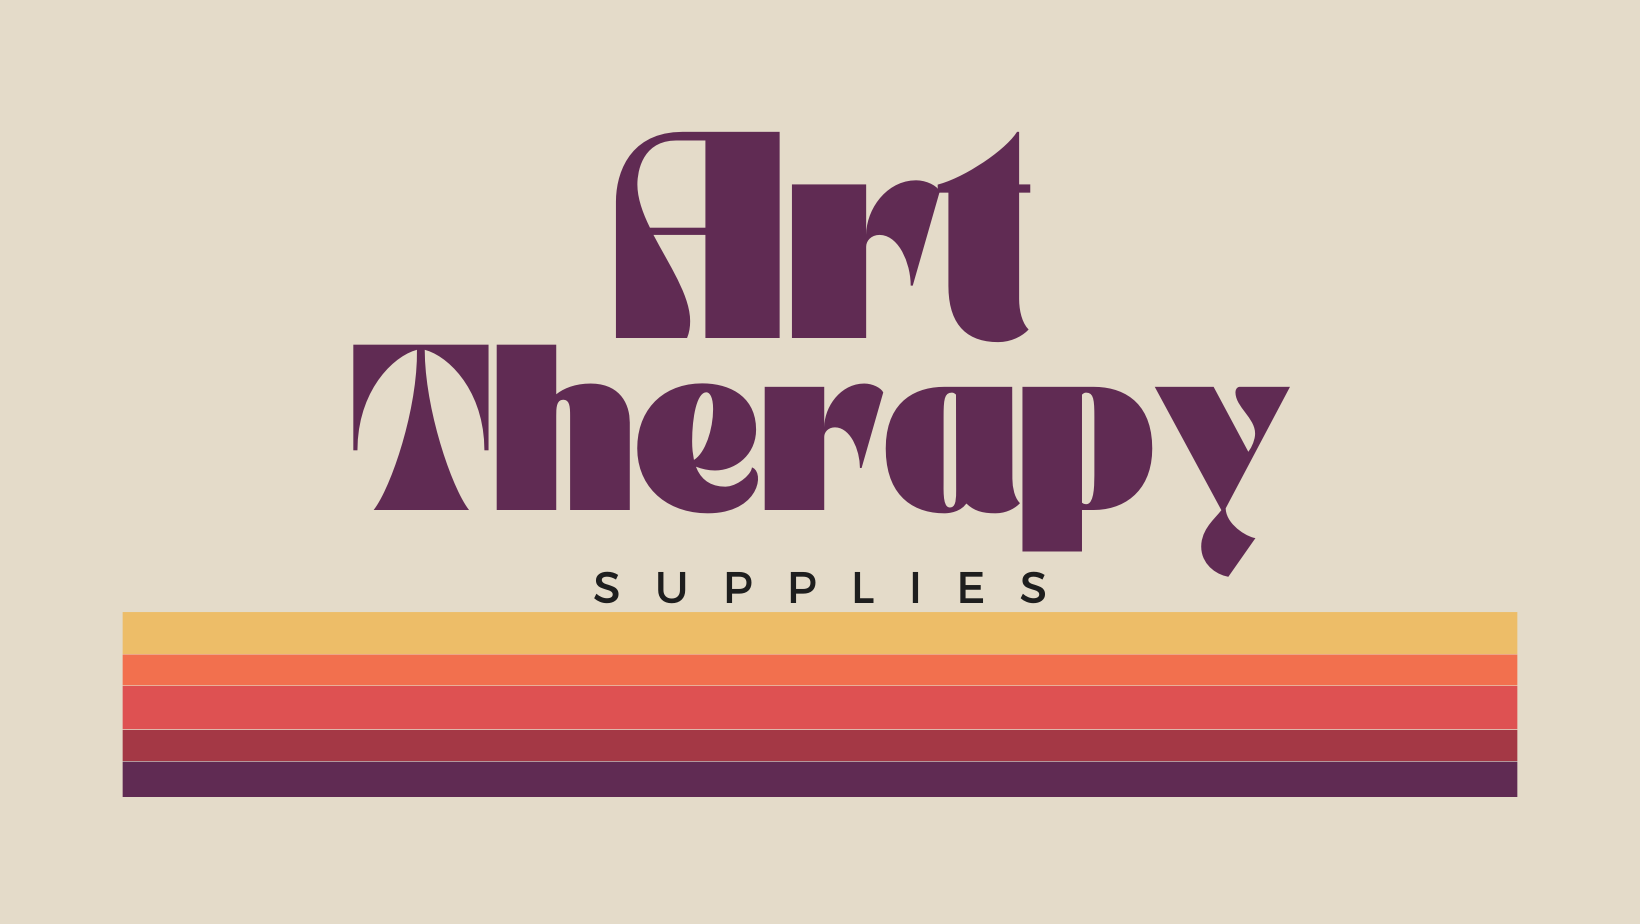 Art therapy Studio Supplies List 1/2 #arttherapysupplies